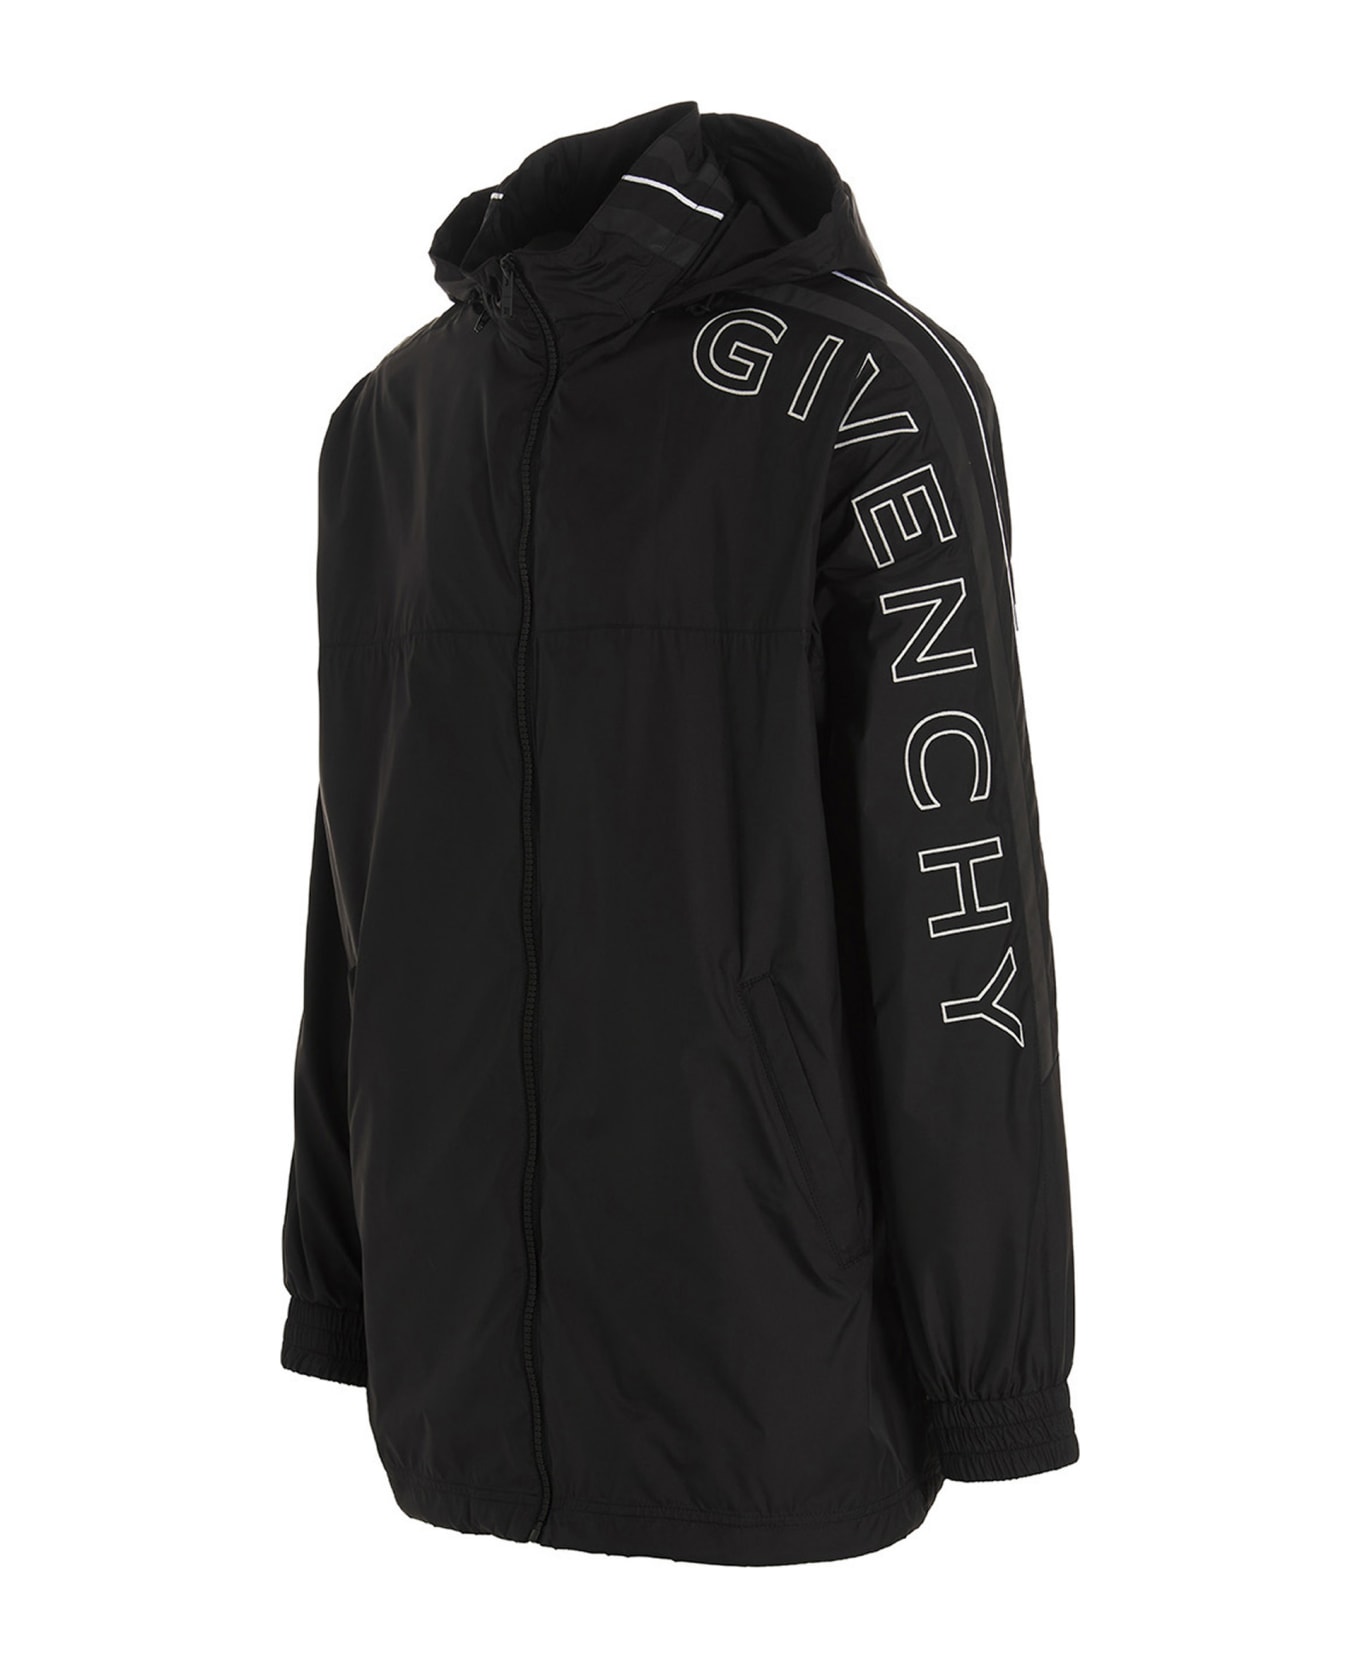 Givenchy Embroidered Logo Jacket - Black  